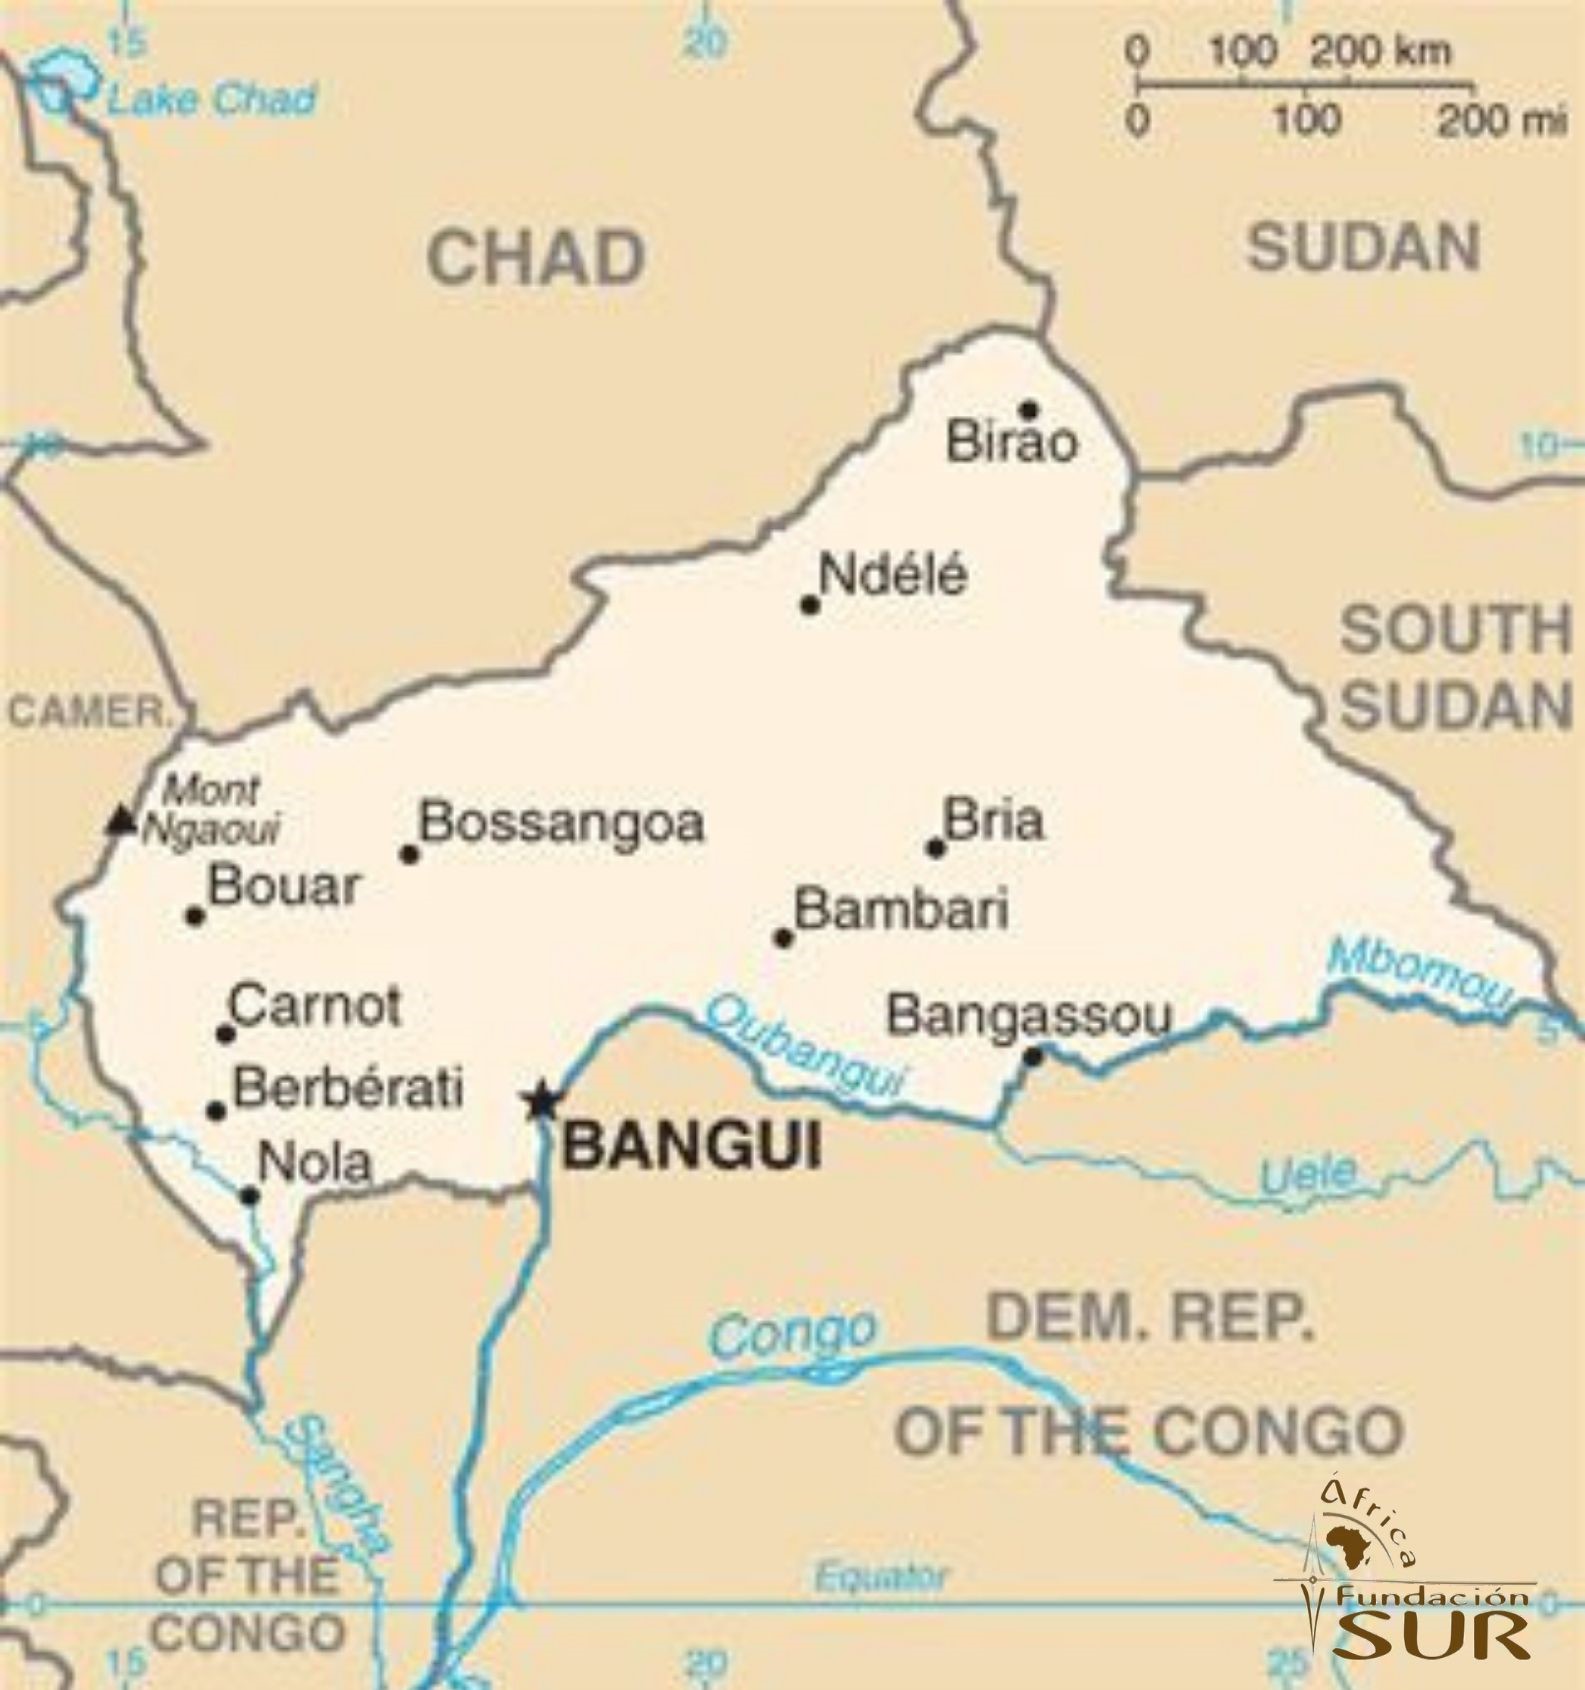 mapa_republica_centroafricana_mapa_cc0-2.jpg